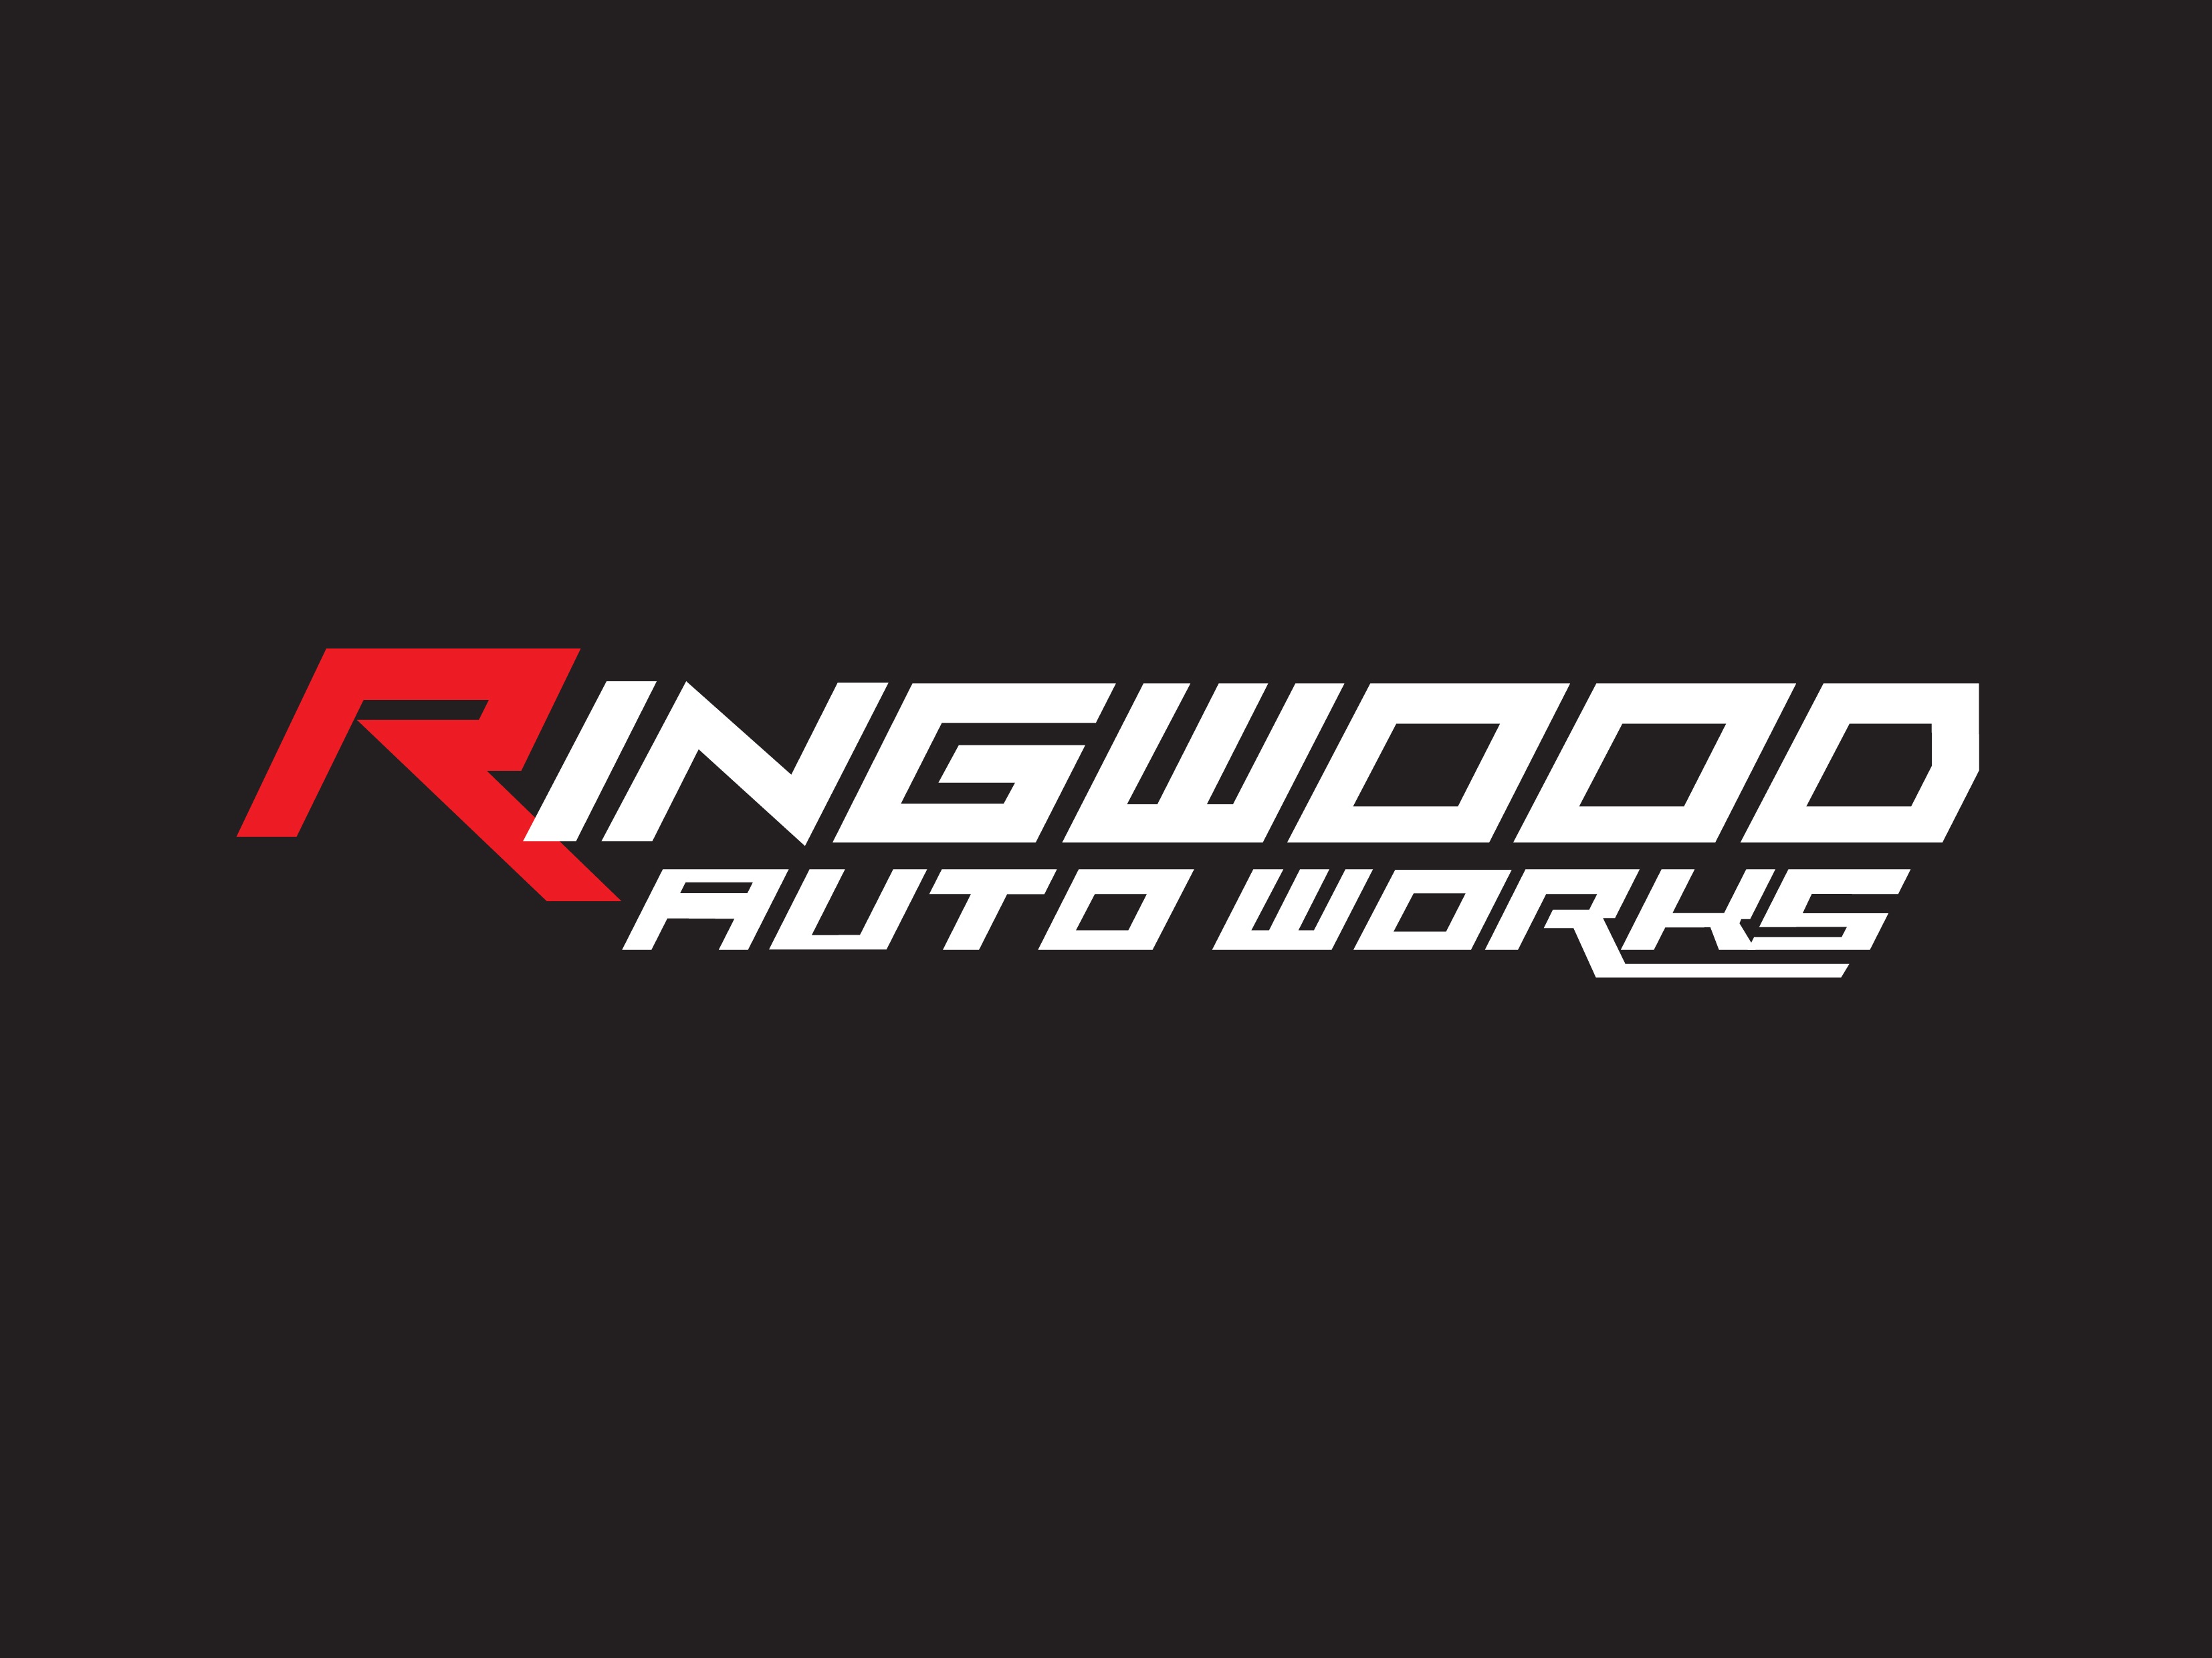 Ringwood Auto Works Logo